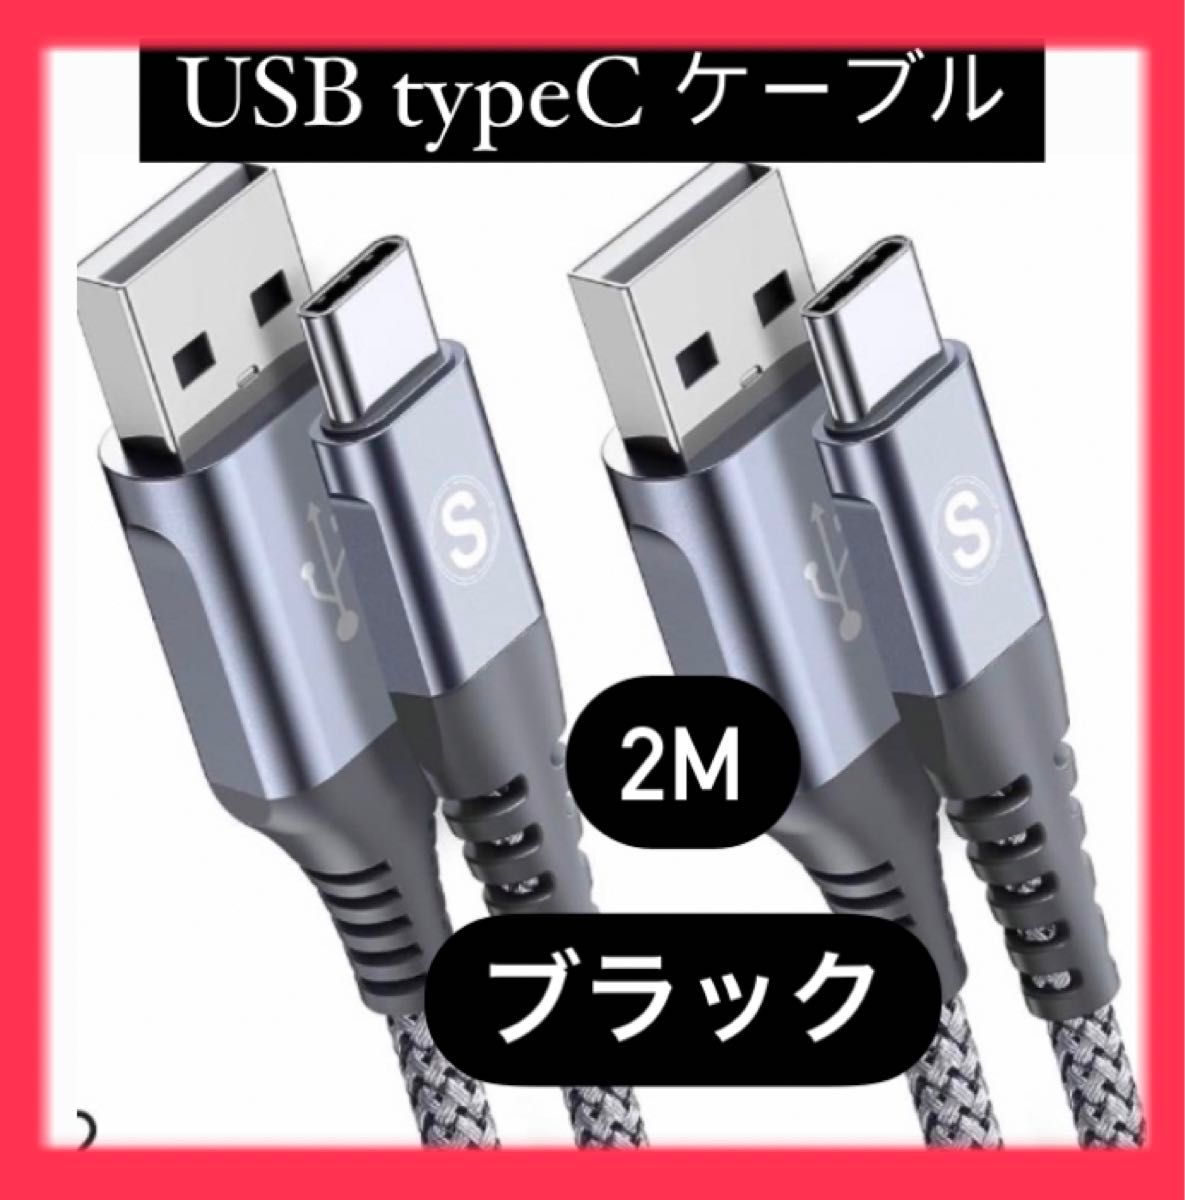 USB Type C ケーブル【2M/2本セット】